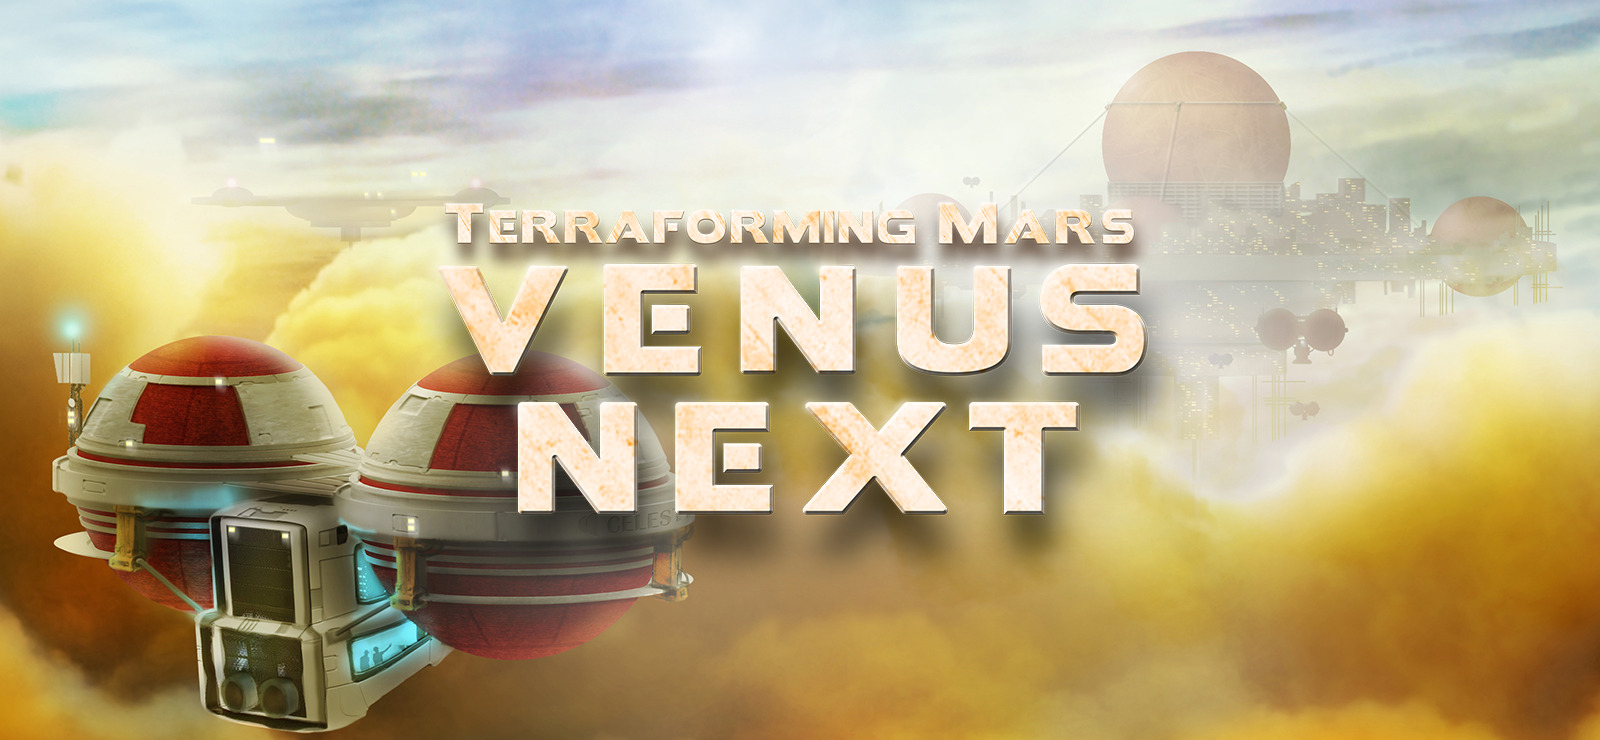 20% Terraforming Mars - Venus Next on